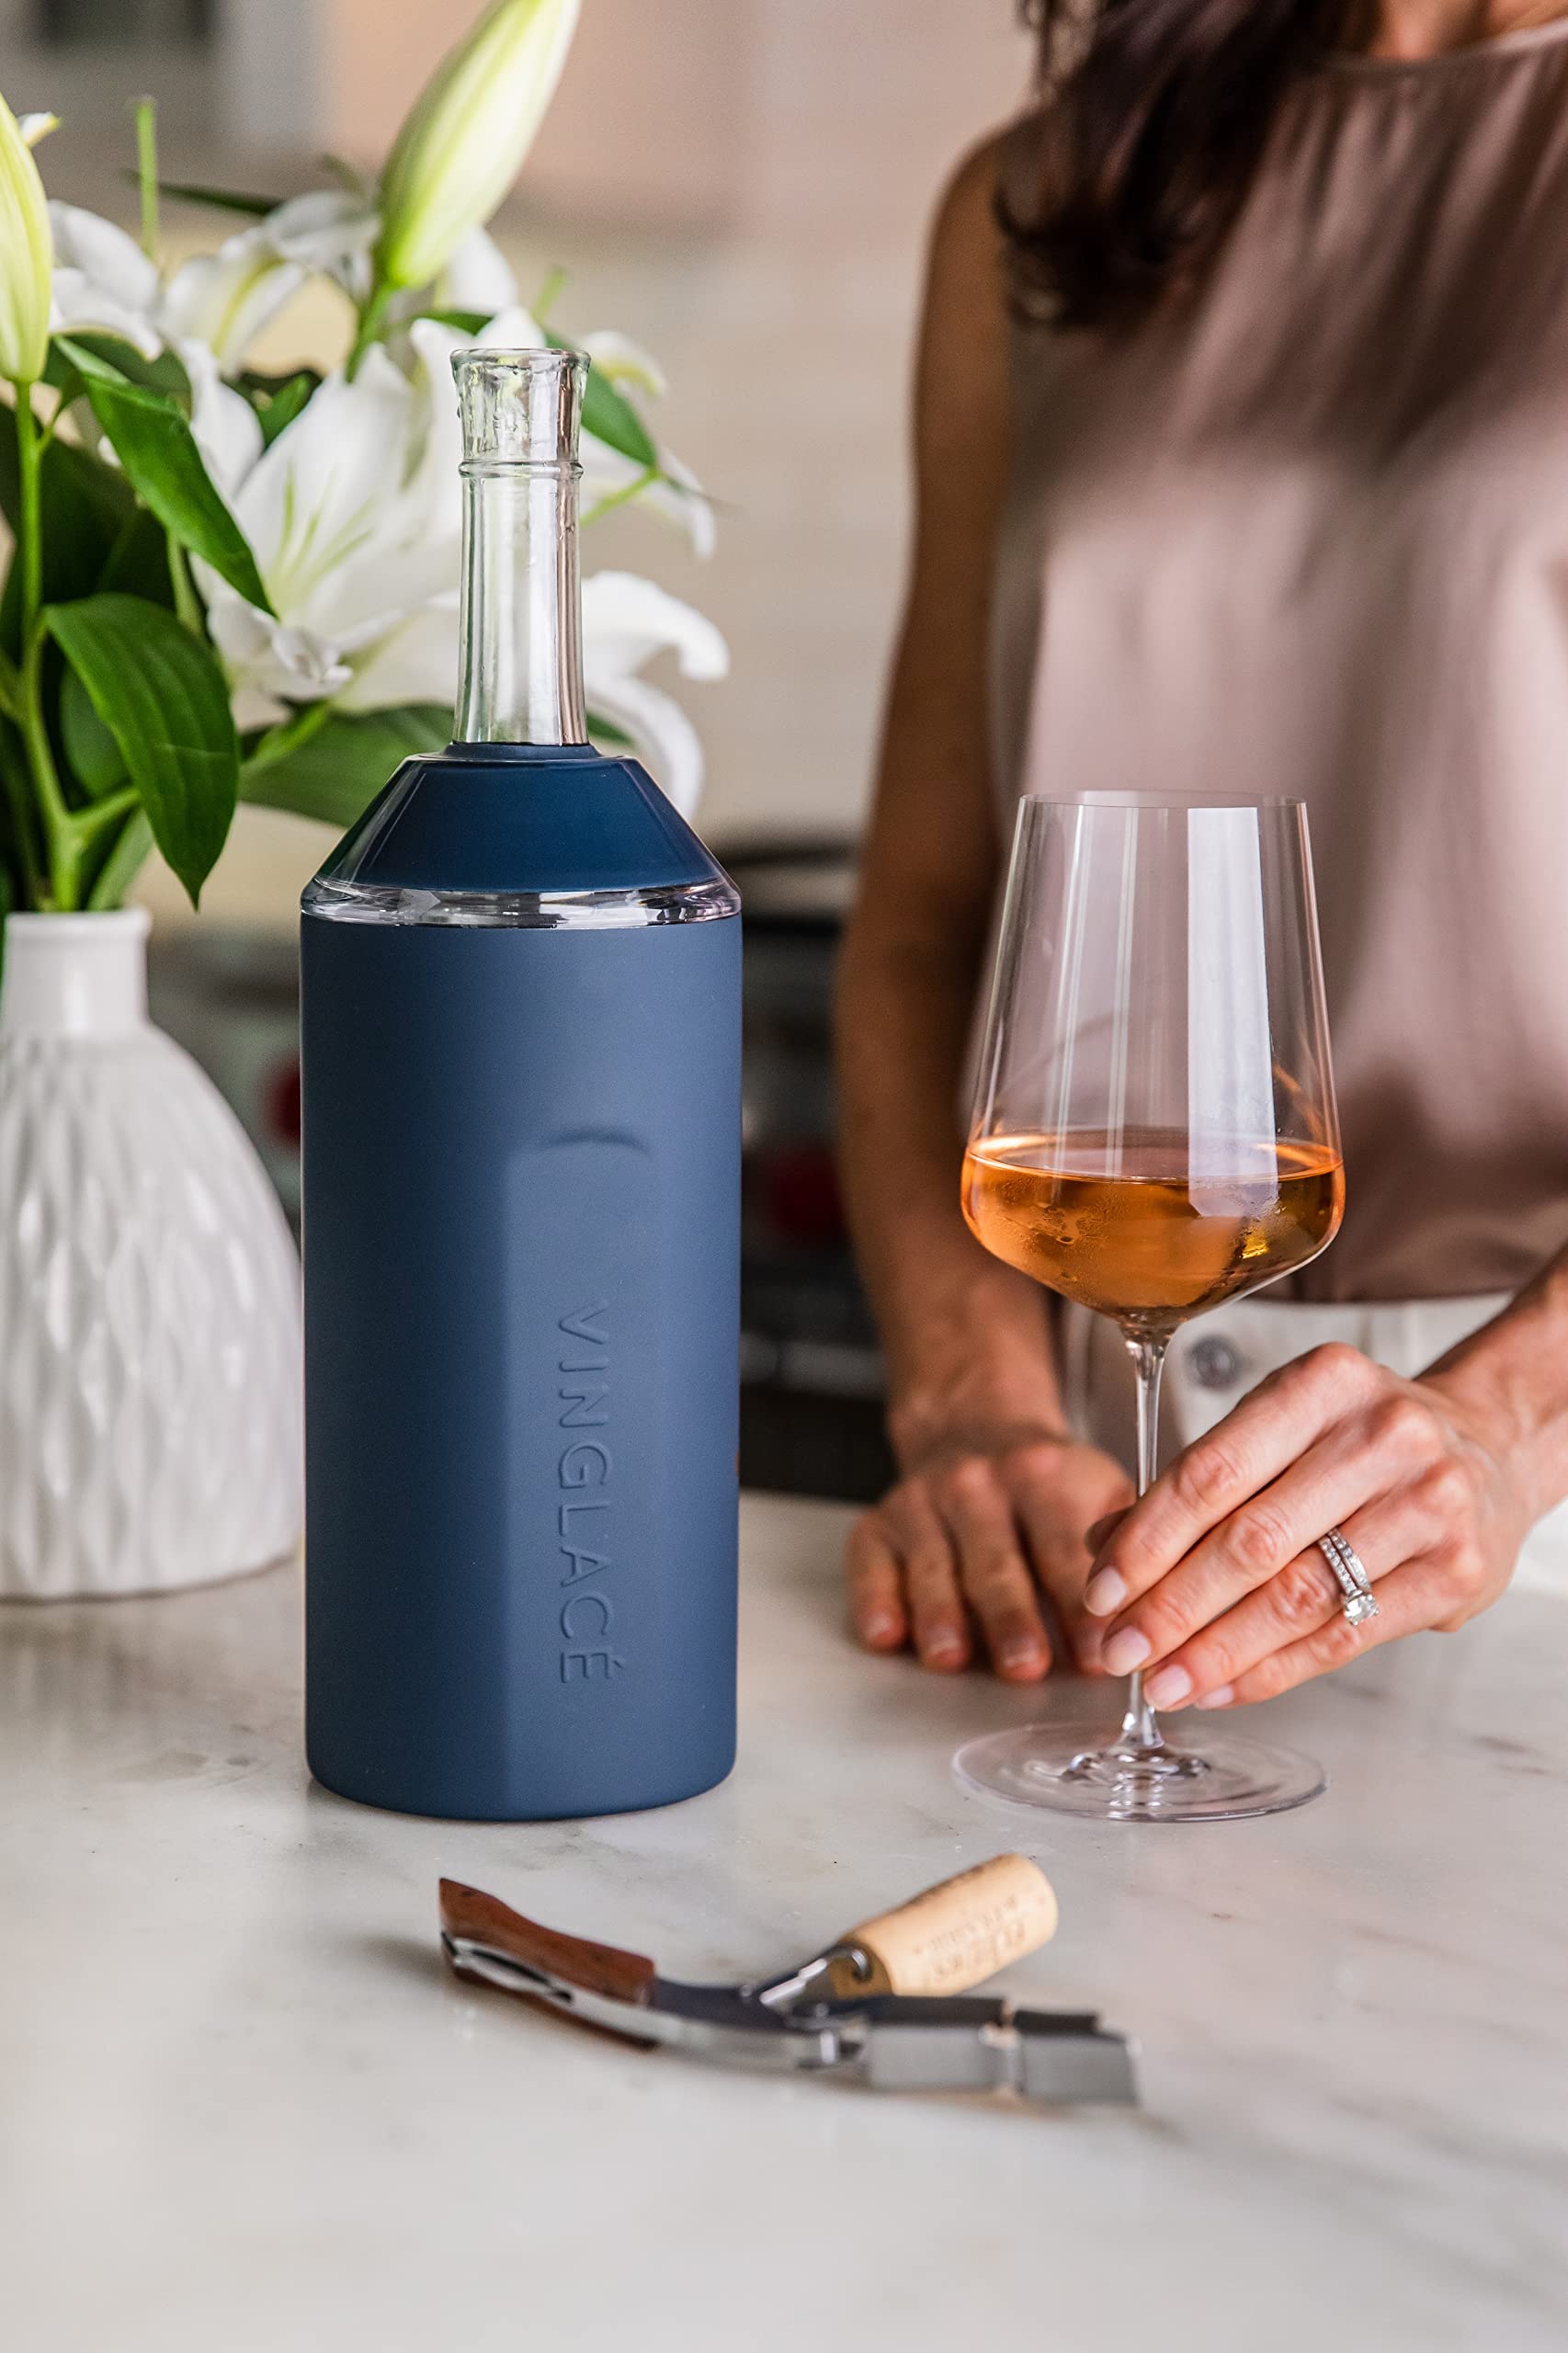 Vinglacé Wine Bottle Chiller- Portable Champagne Insulator- Stainless Steel Wine Cooler Sleeve, Navy